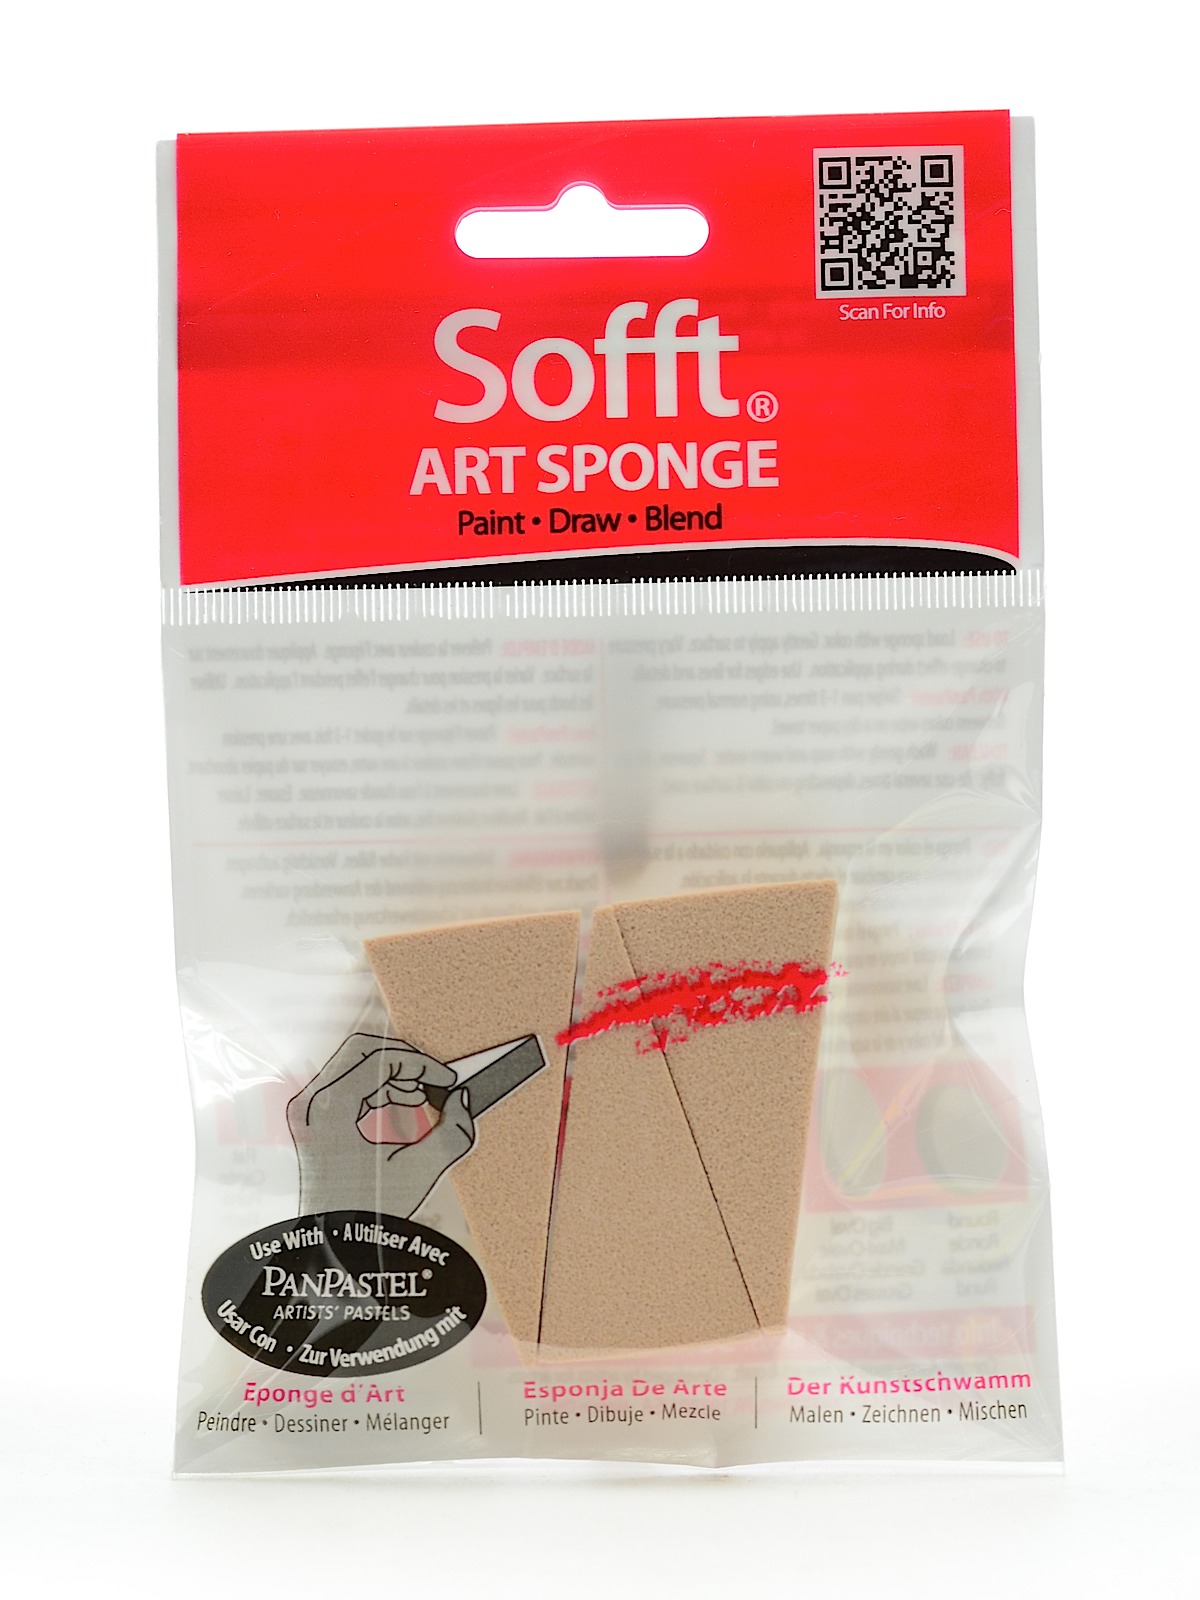 Colorfin Art Sponges Wedge Bar Pack Of 3